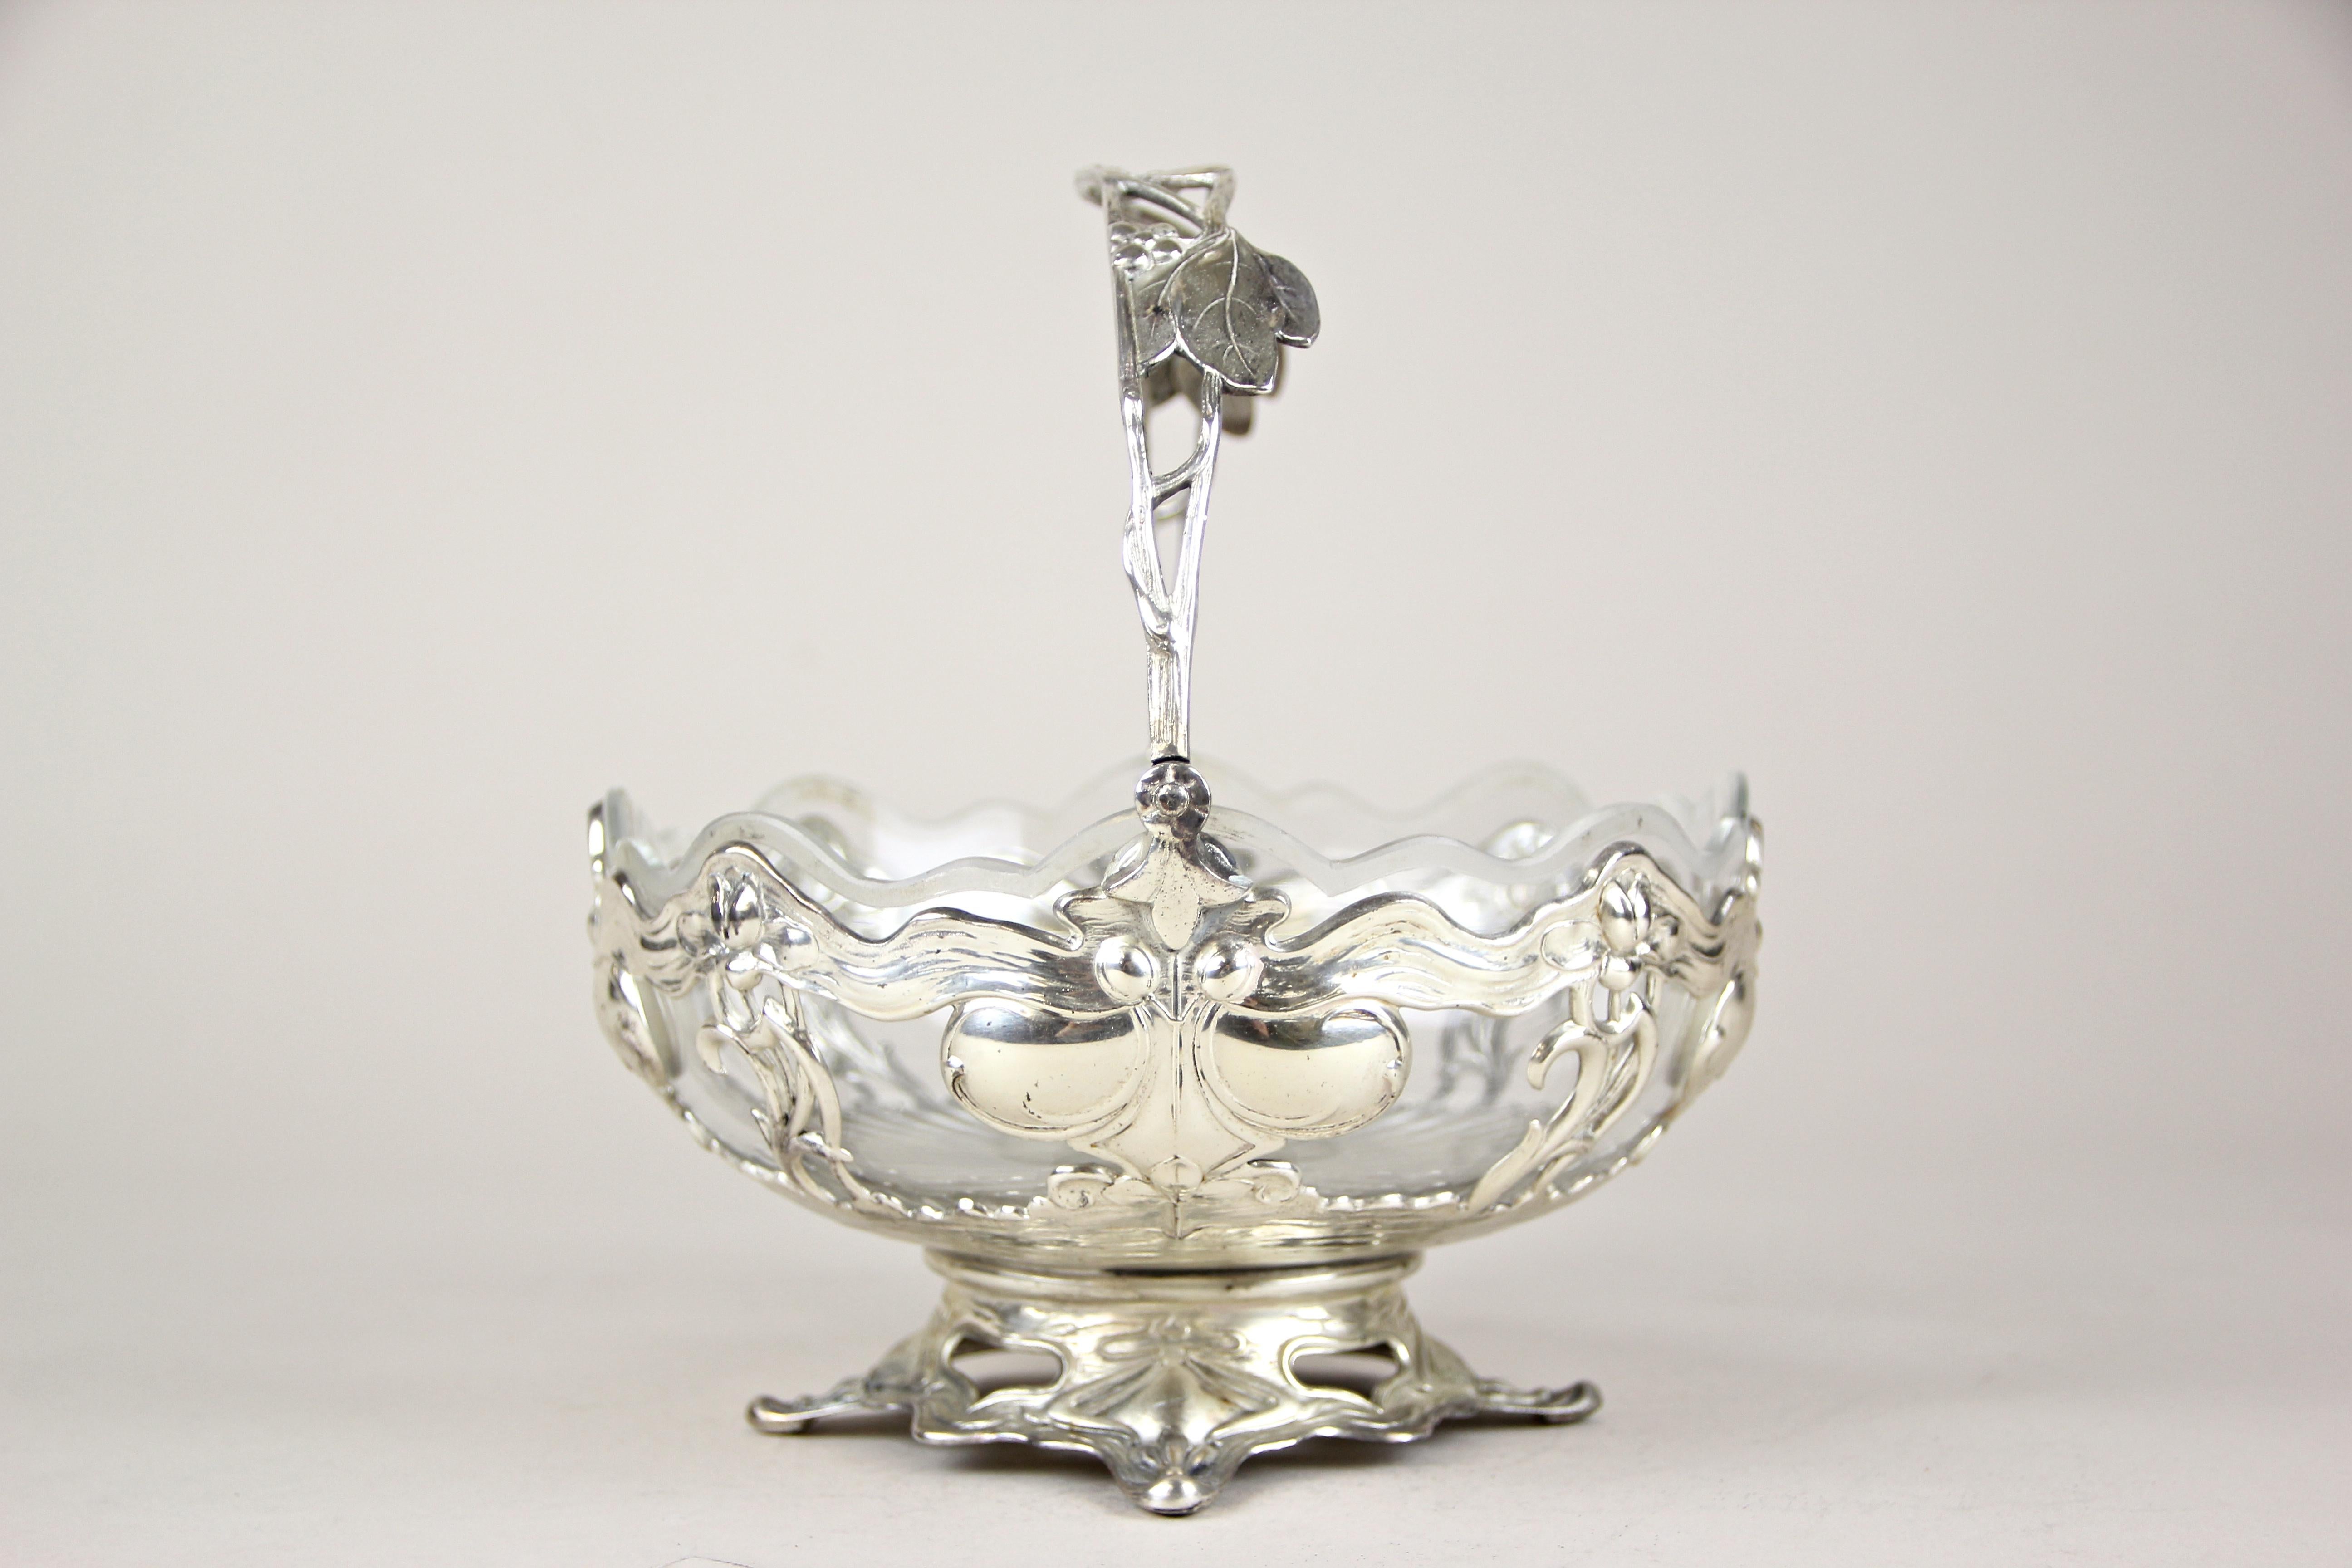 Austrian Silvered Centerpiece with Cut Glass Bowl by A. Köhler & Cie WMF, Vienna